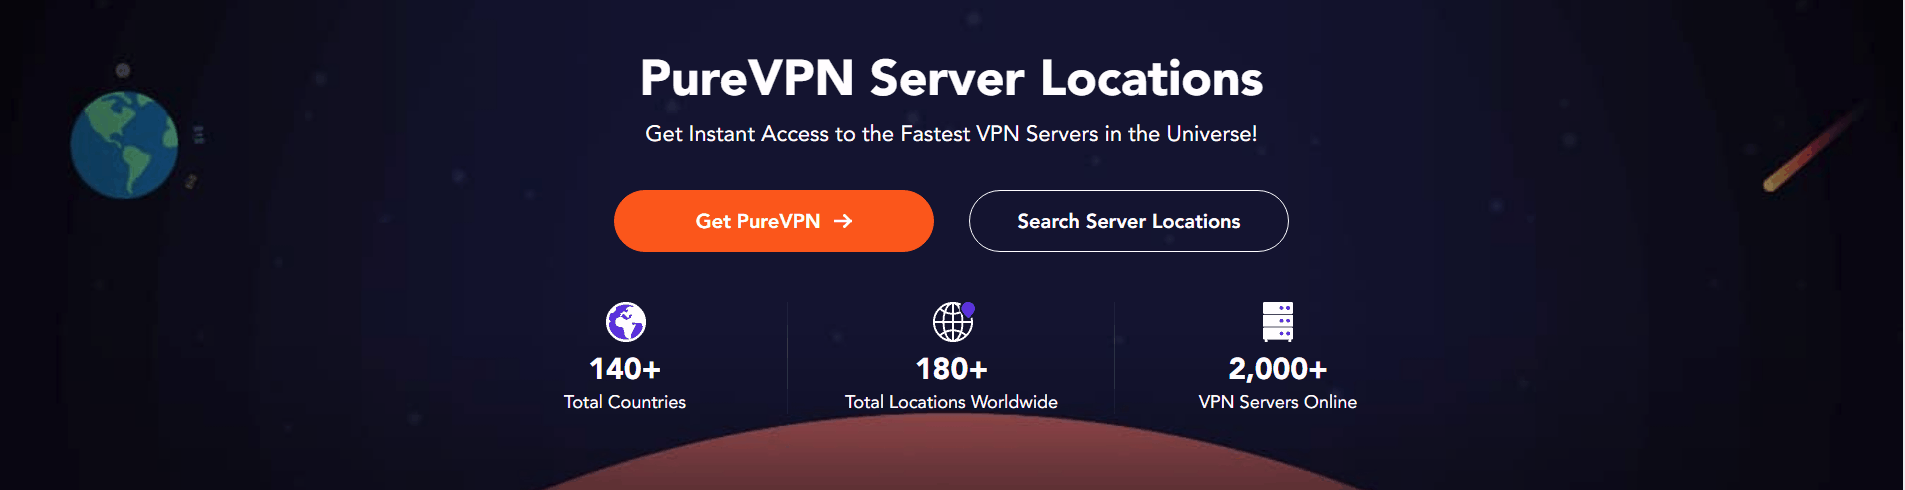 PureVPN Server Locations